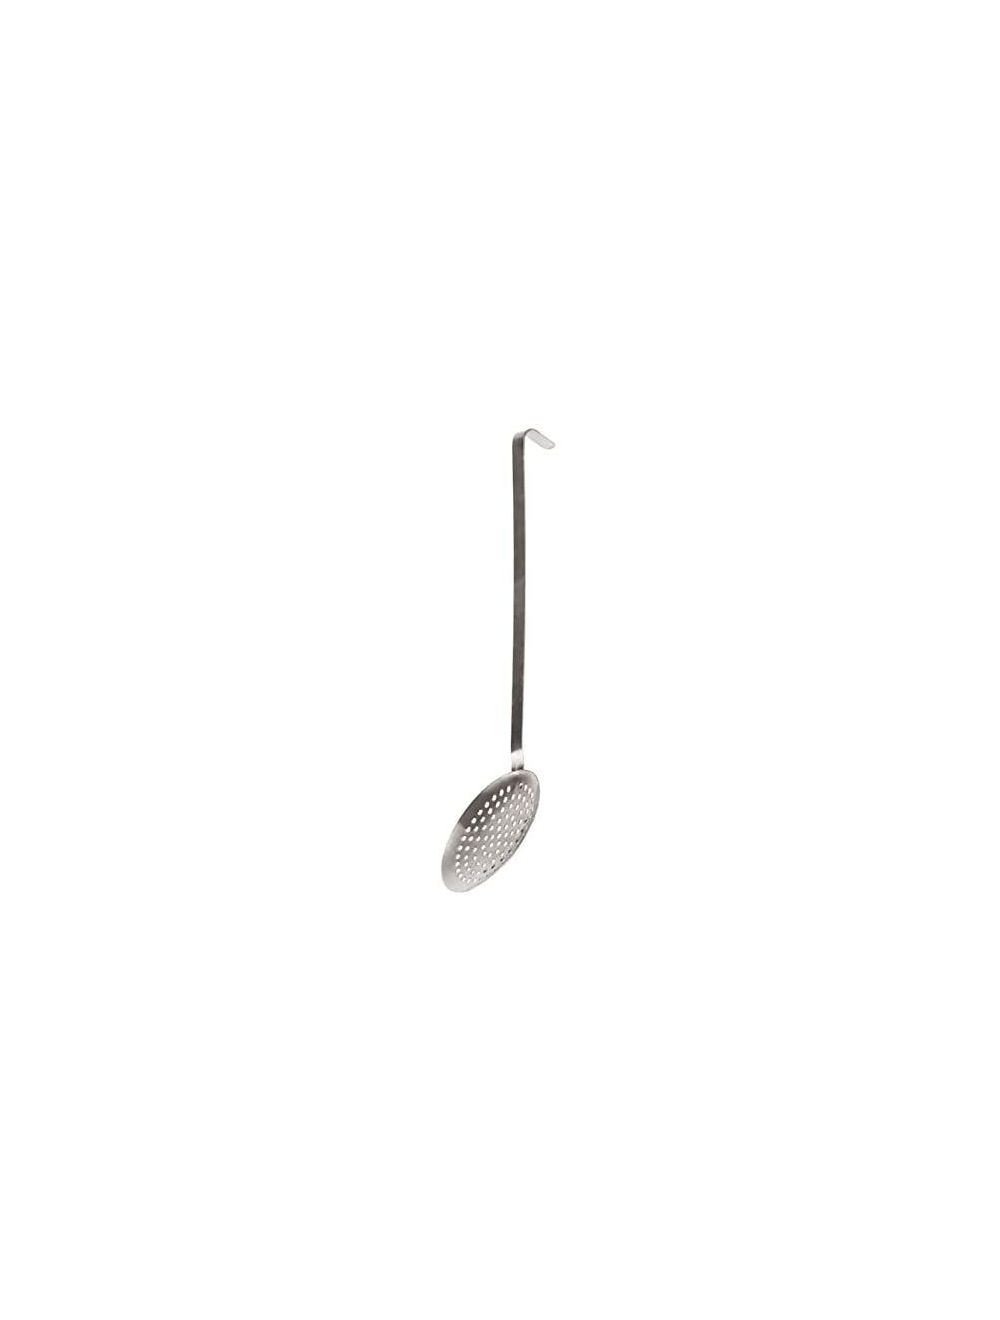 Raj Professional Skimmer Spoon, Silver, 50.5 cm, RPS004